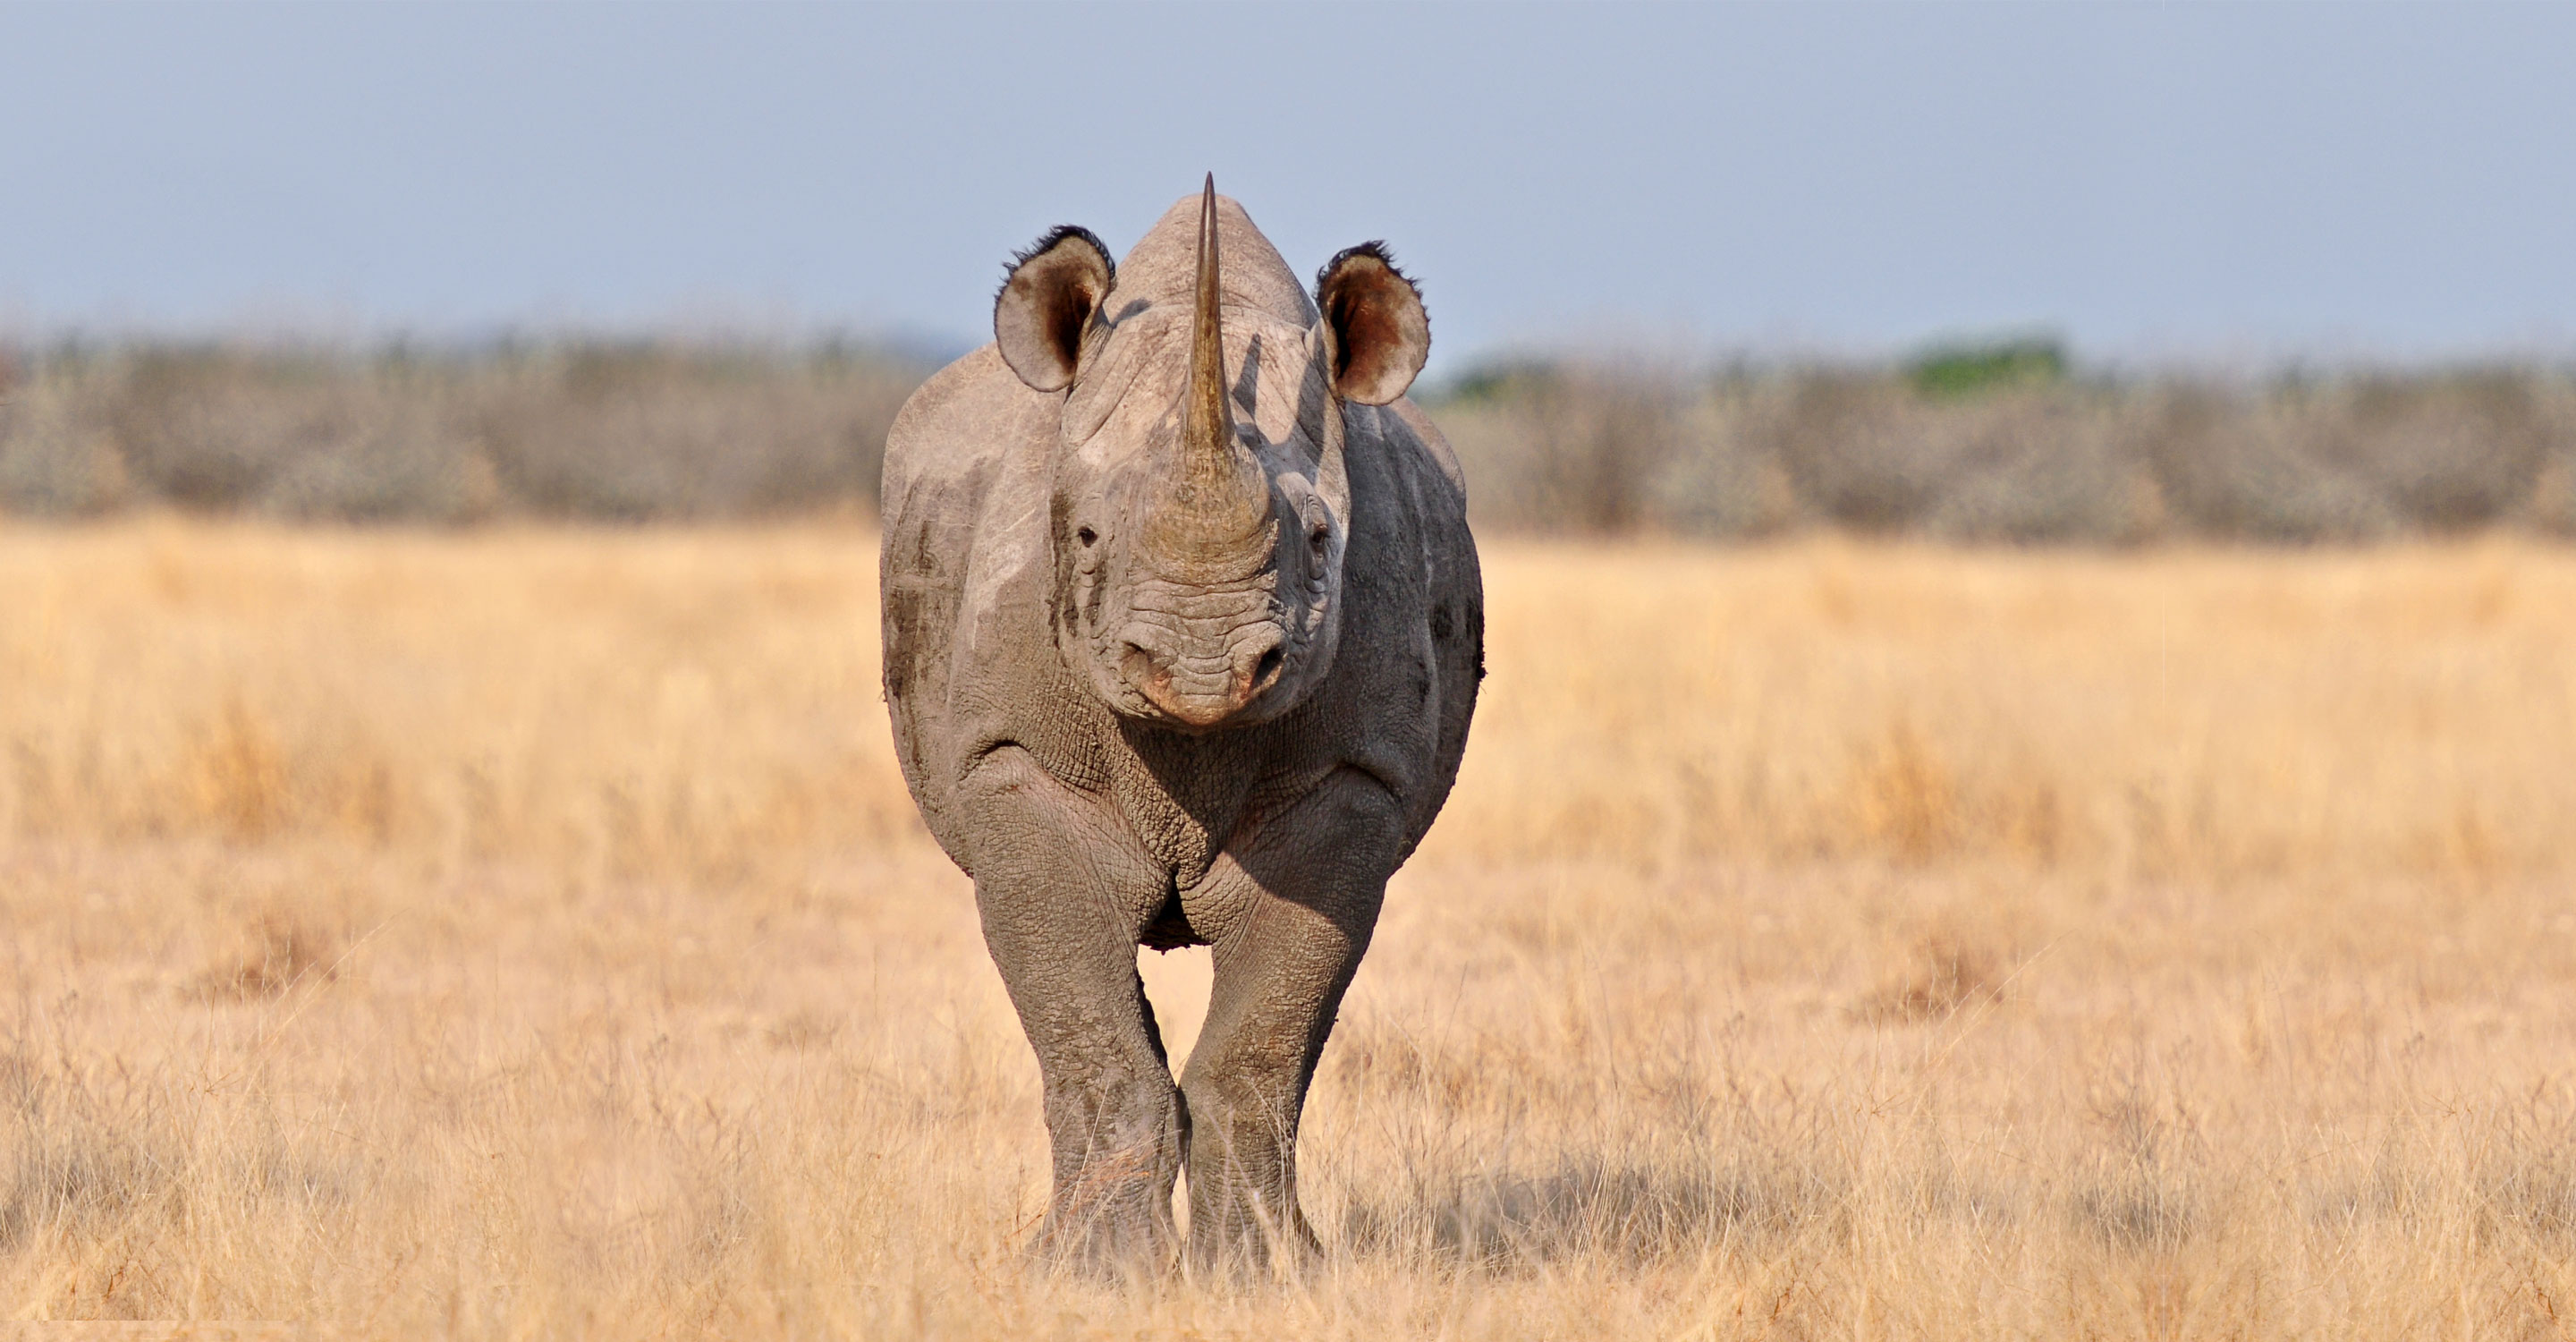 rhinoceros 6 for private user